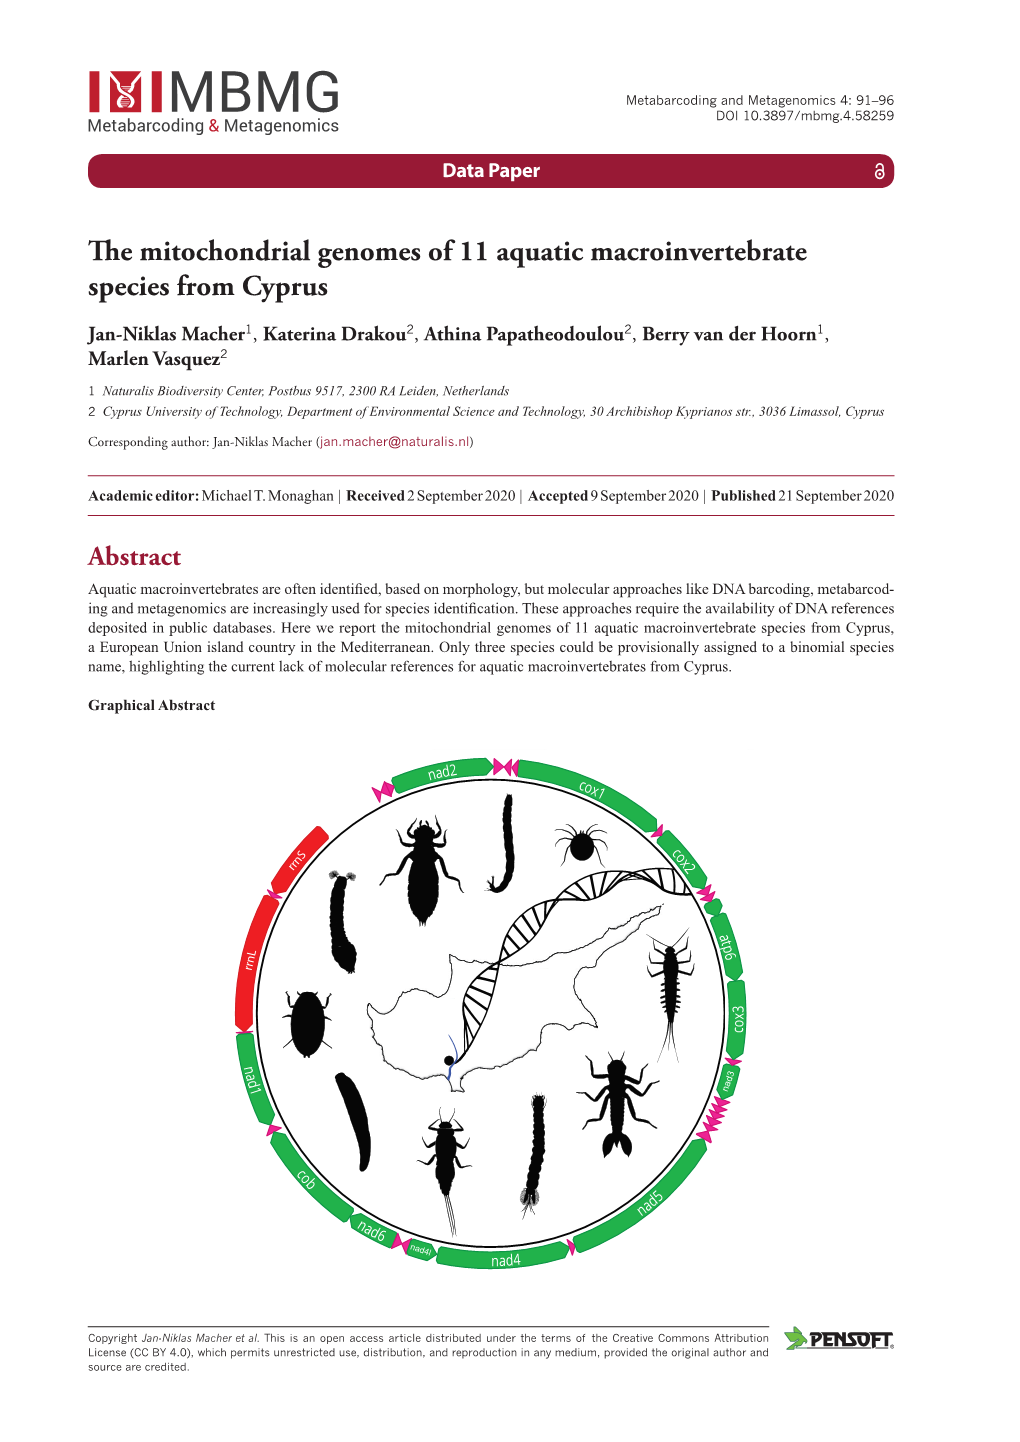 ﻿The Mitochondrial Genomes of 11 Aquatic Macroinvertebrate Species